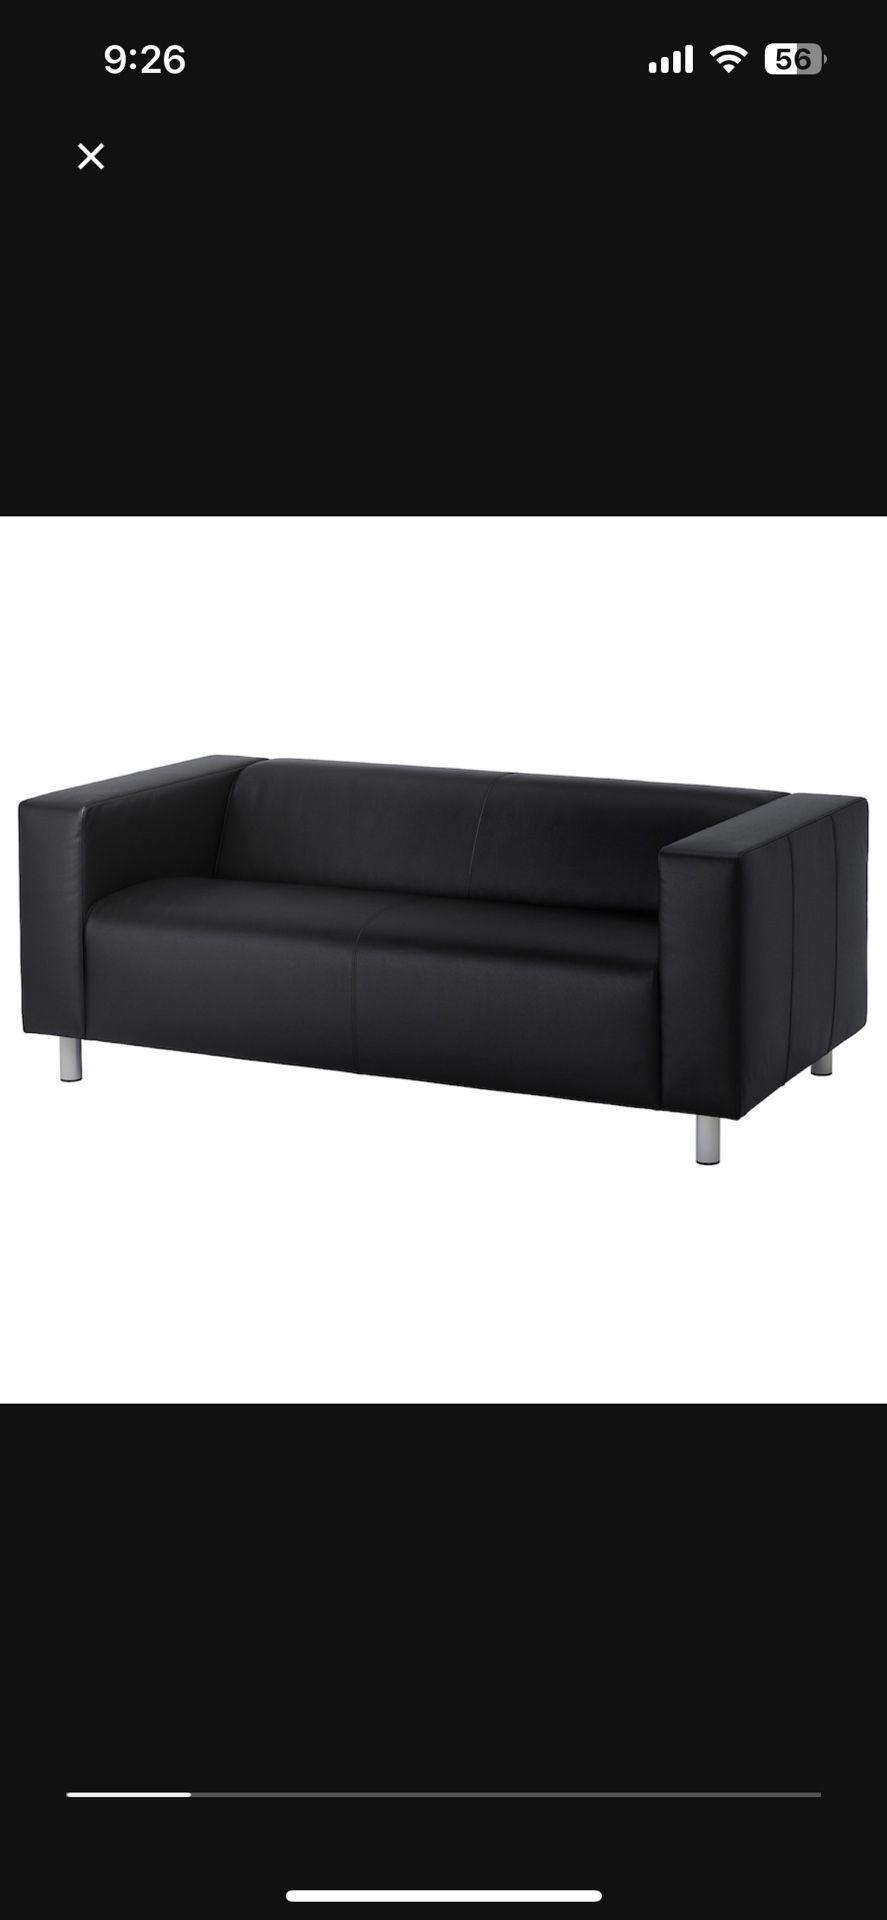 KLIPPAN  Black IKEA Leather Couch 